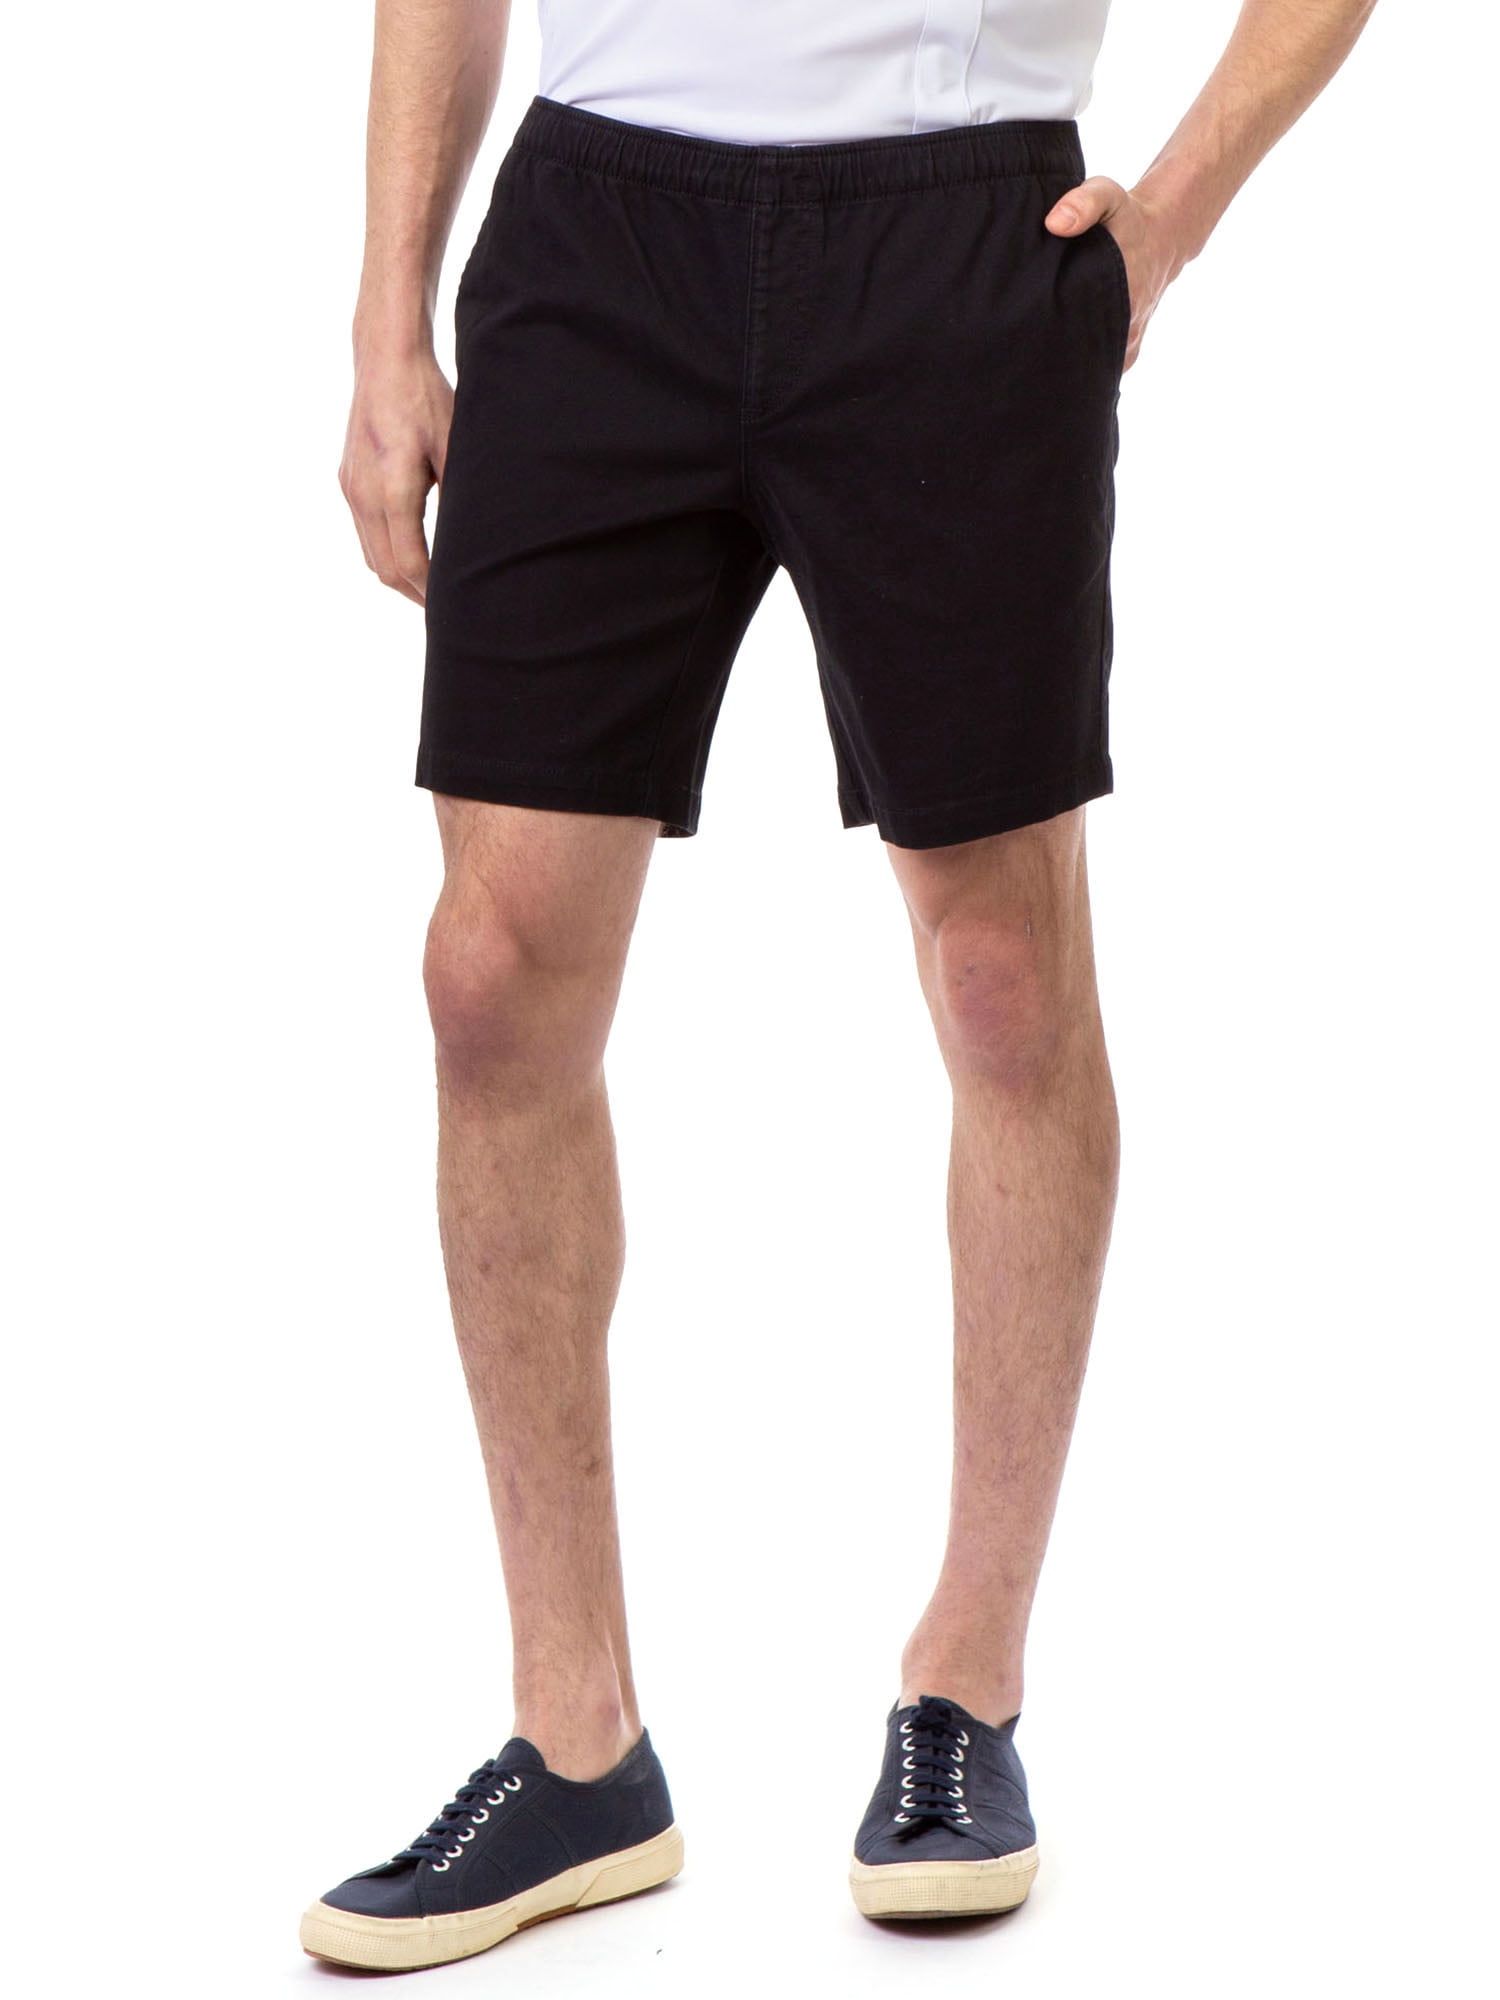 Mens Shorts US Assn Polo Jogger Short Sweatpant Soft Cotton Short 9000 